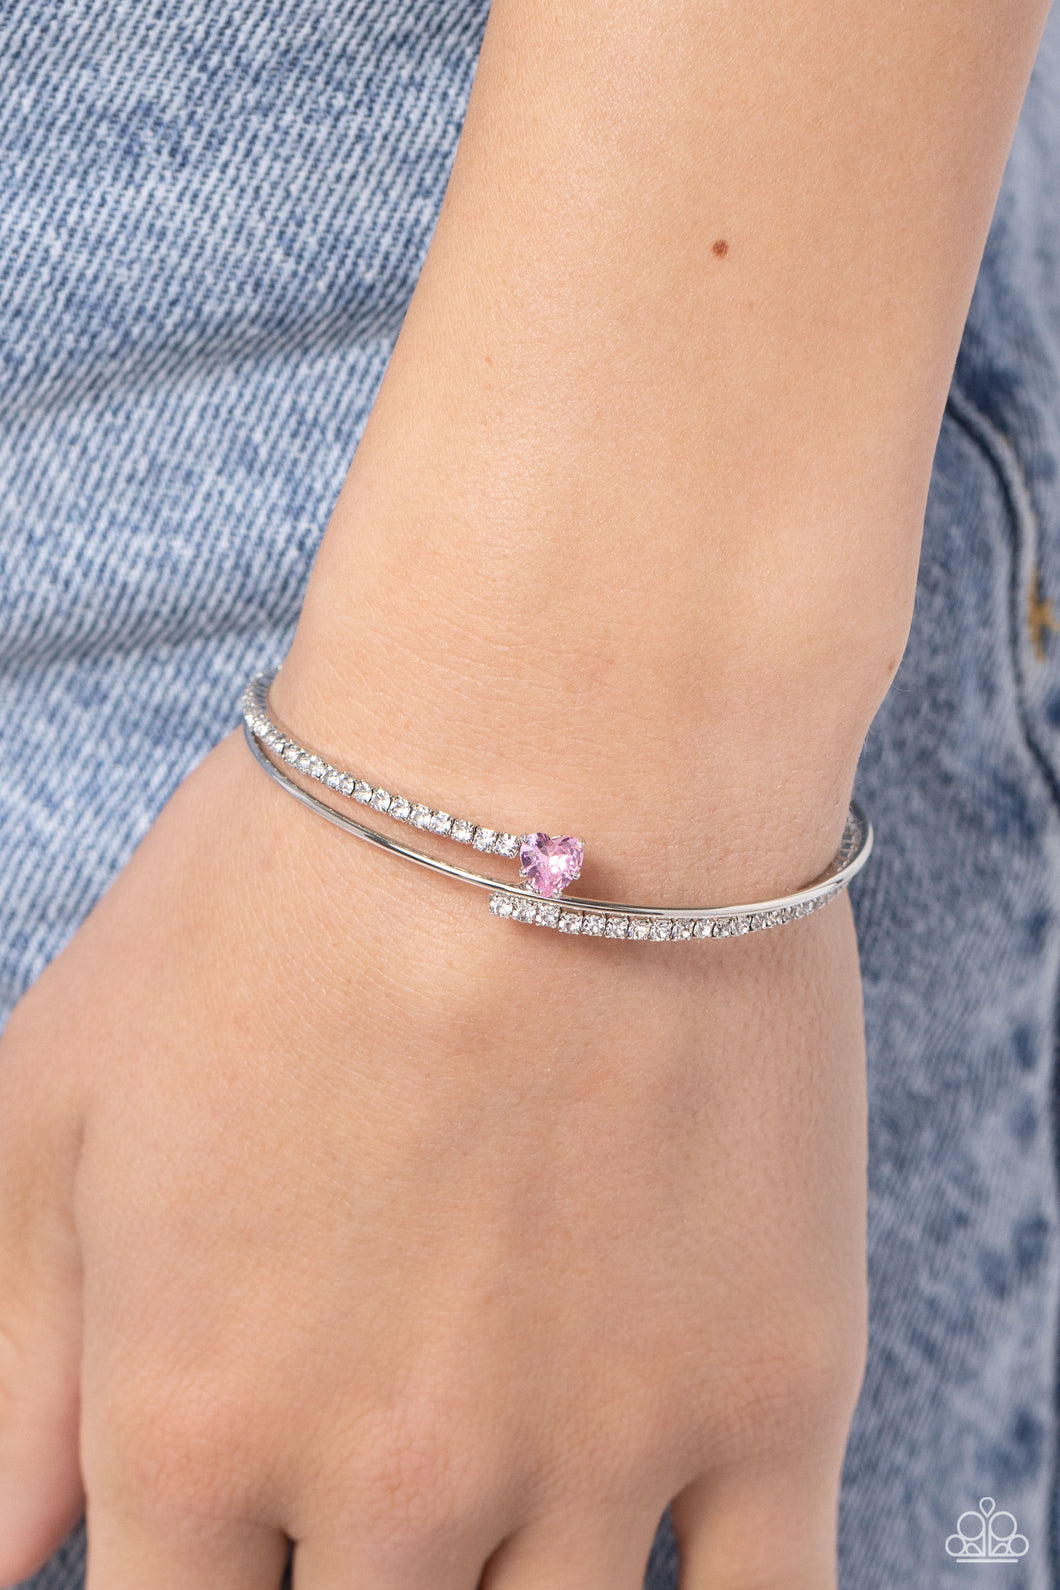 Paparazzi Accessories - Sensational Sweetheart - Pink Bracelet